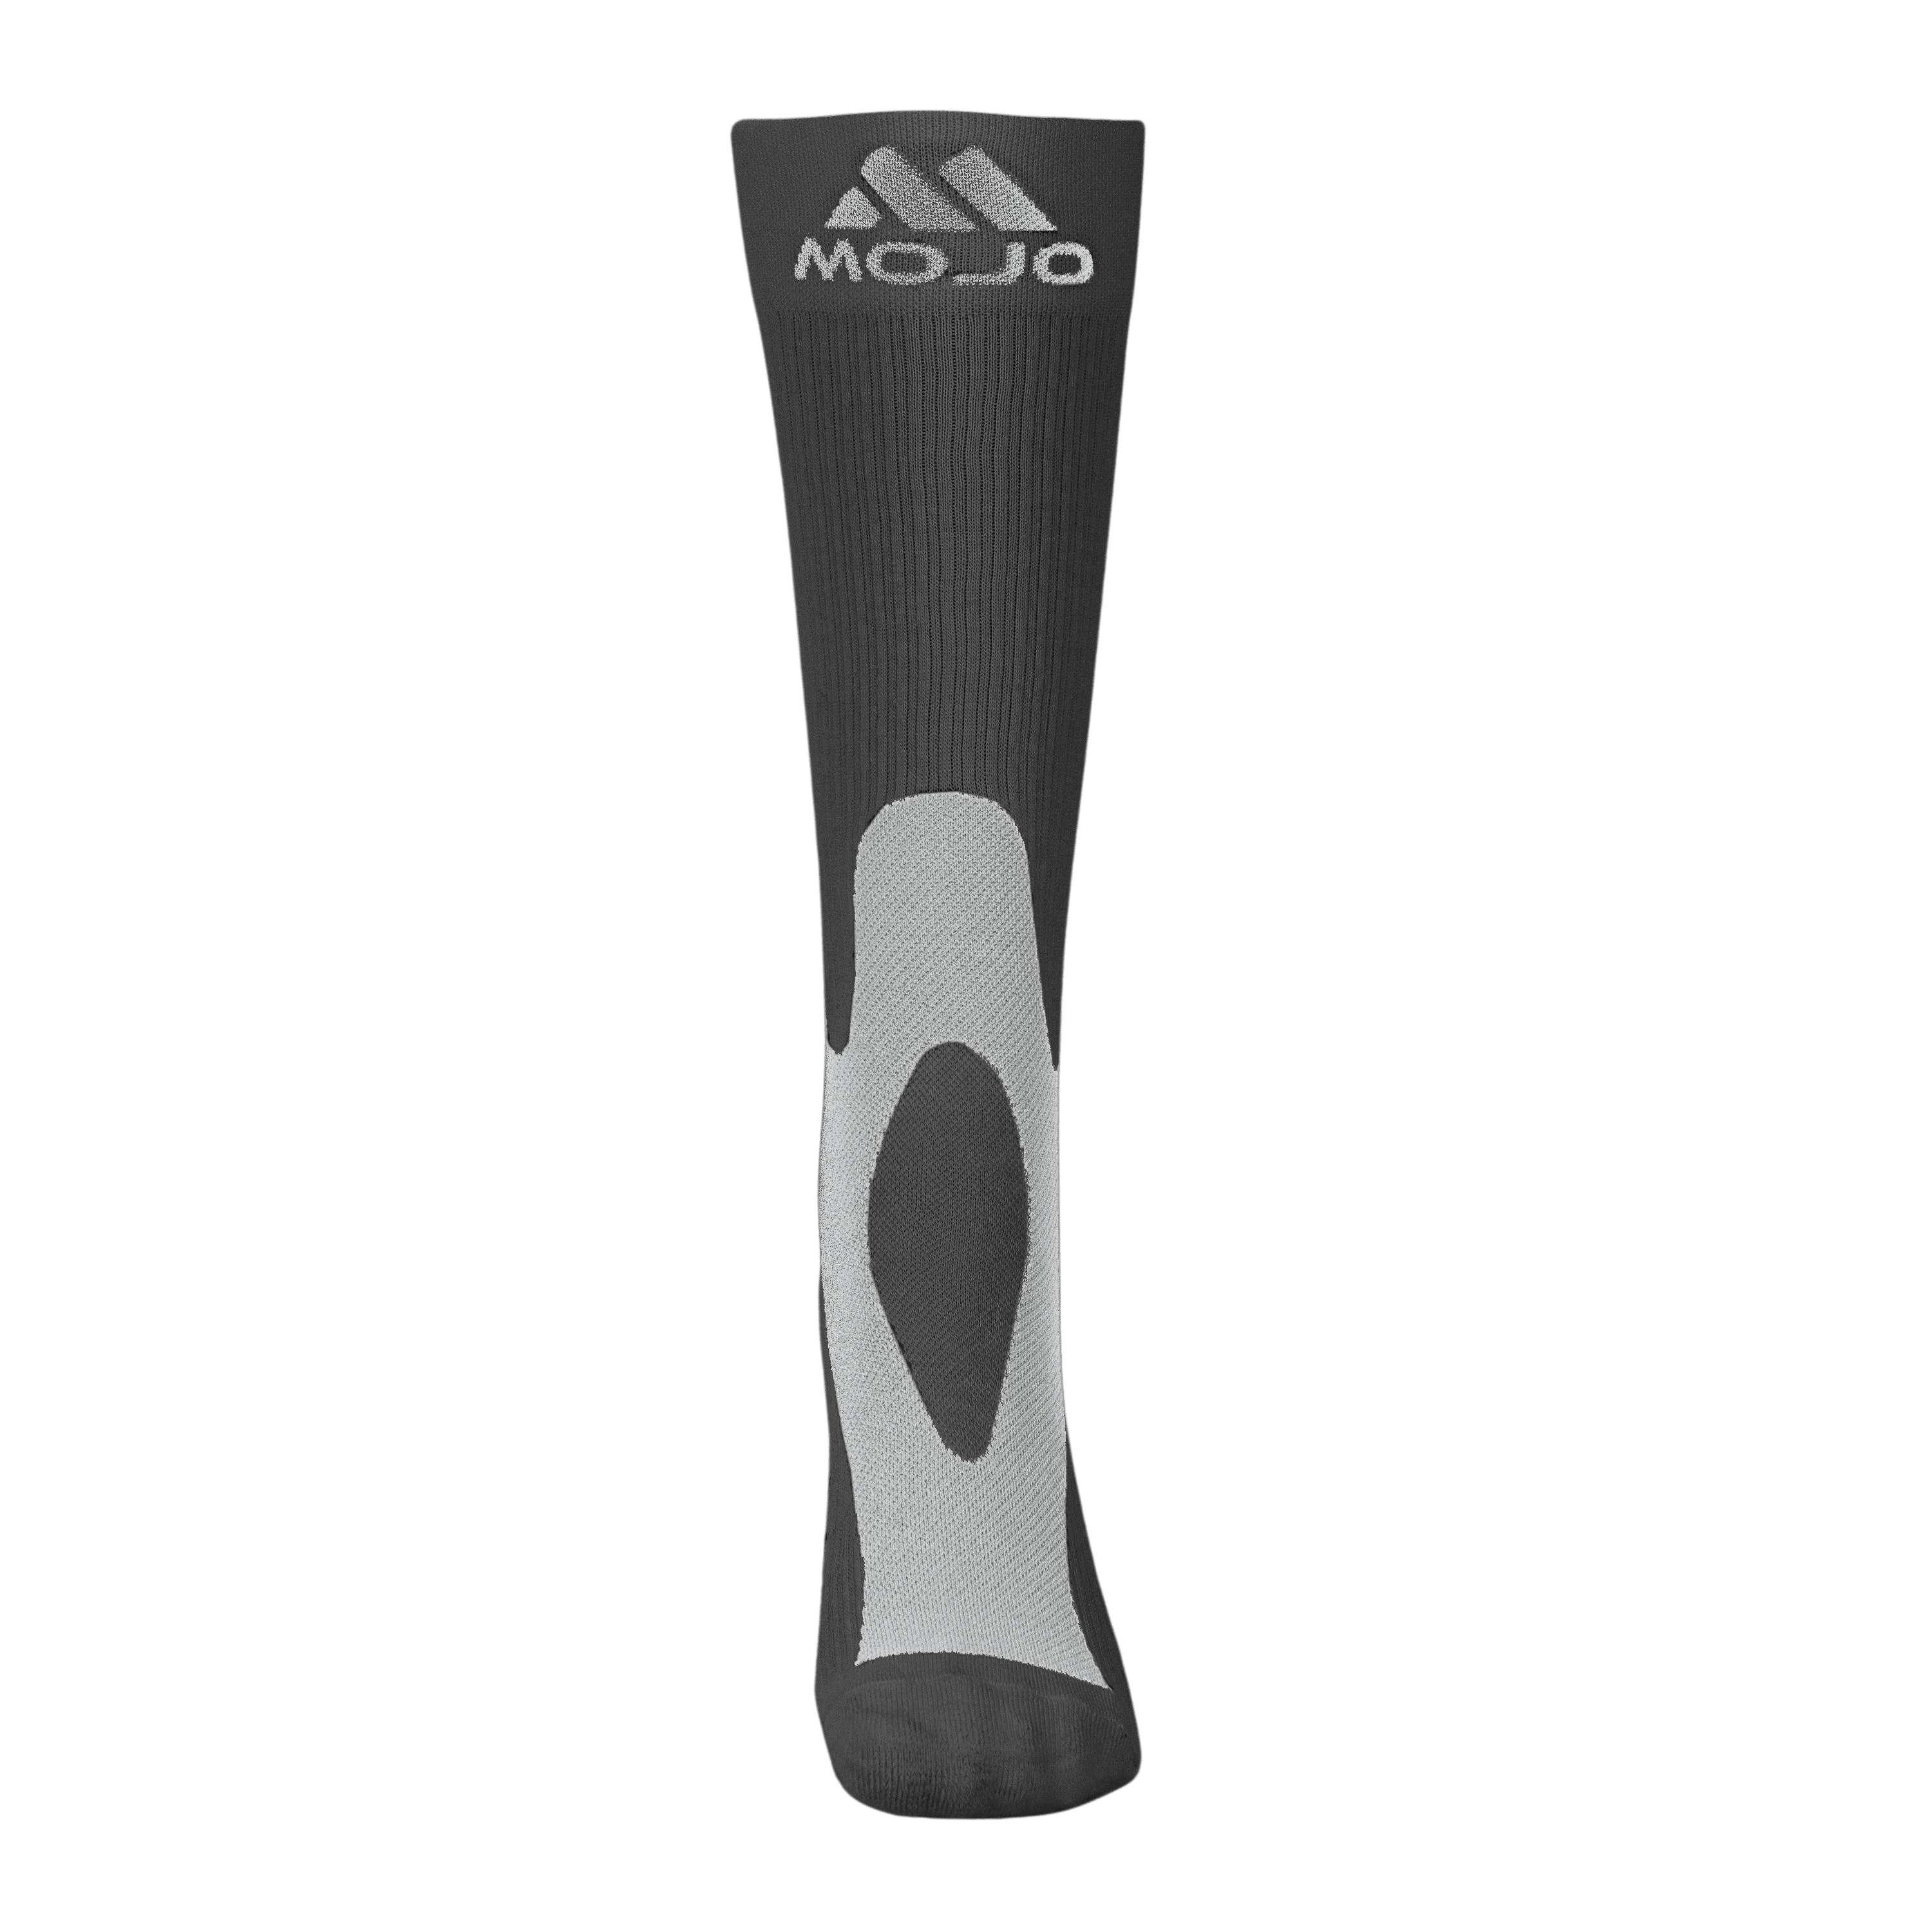 Mojo Unisex Compression Socks 20-30mmHg for Edema, Swelling, DVT - Grey,  Small 